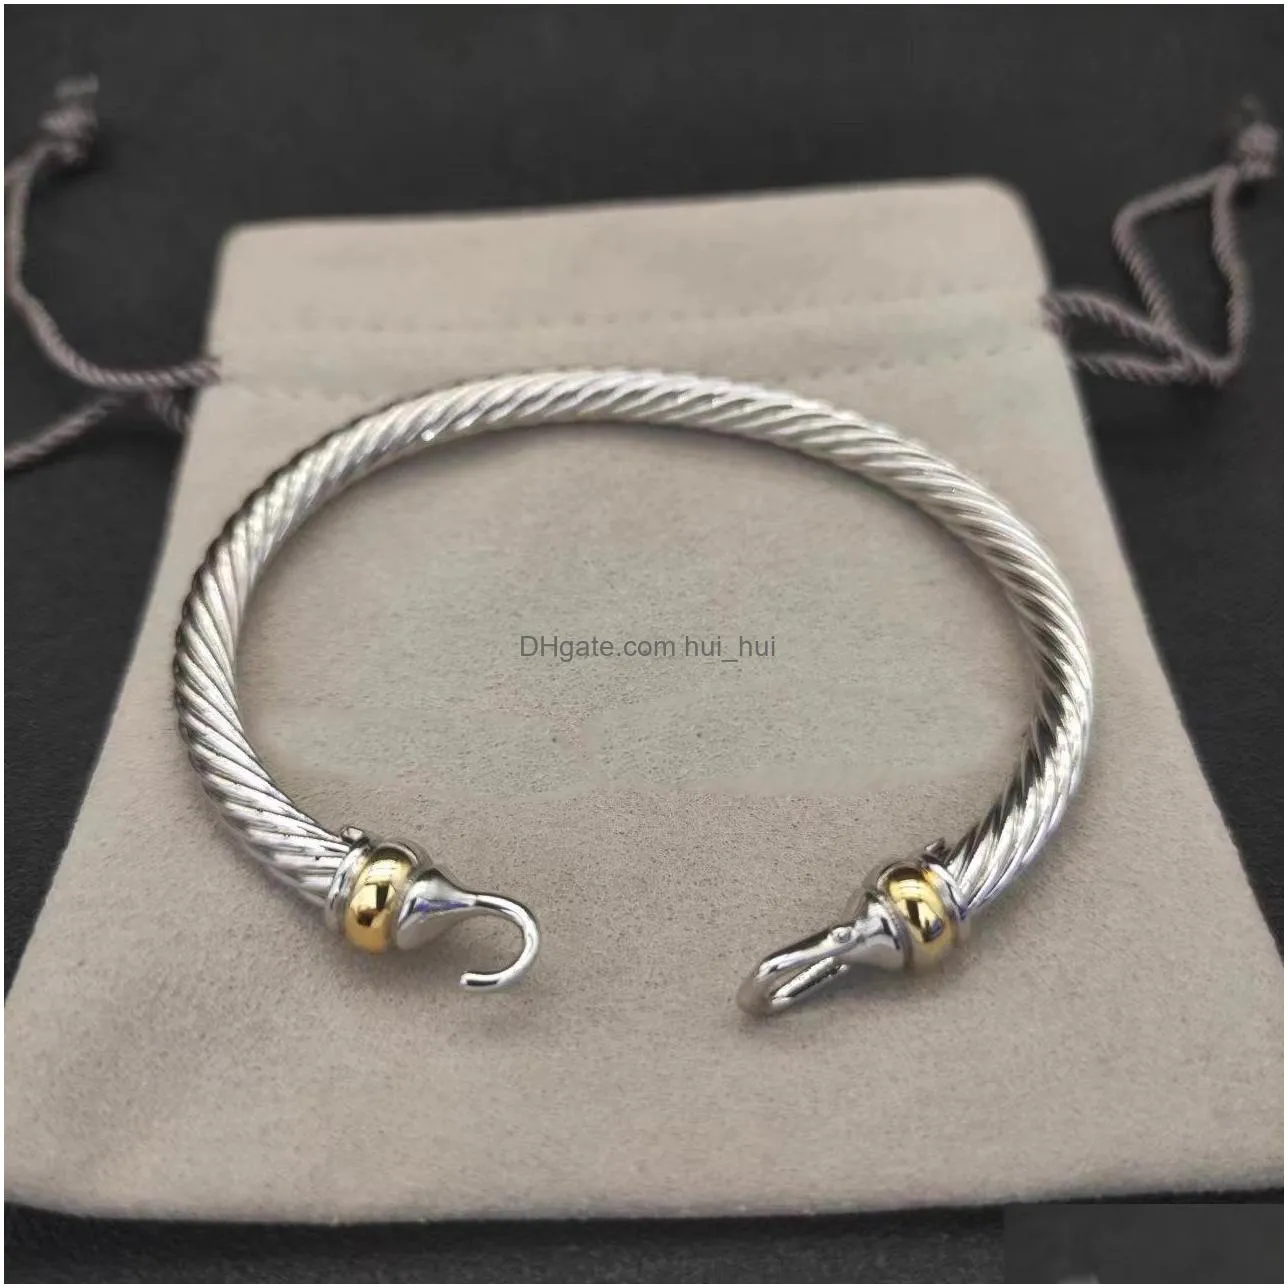 dy bracelet designer cable bracelets fashion jewelry for women men gold silver pearl head cross bangle bracelet open cuff dy jewelry man party christmas